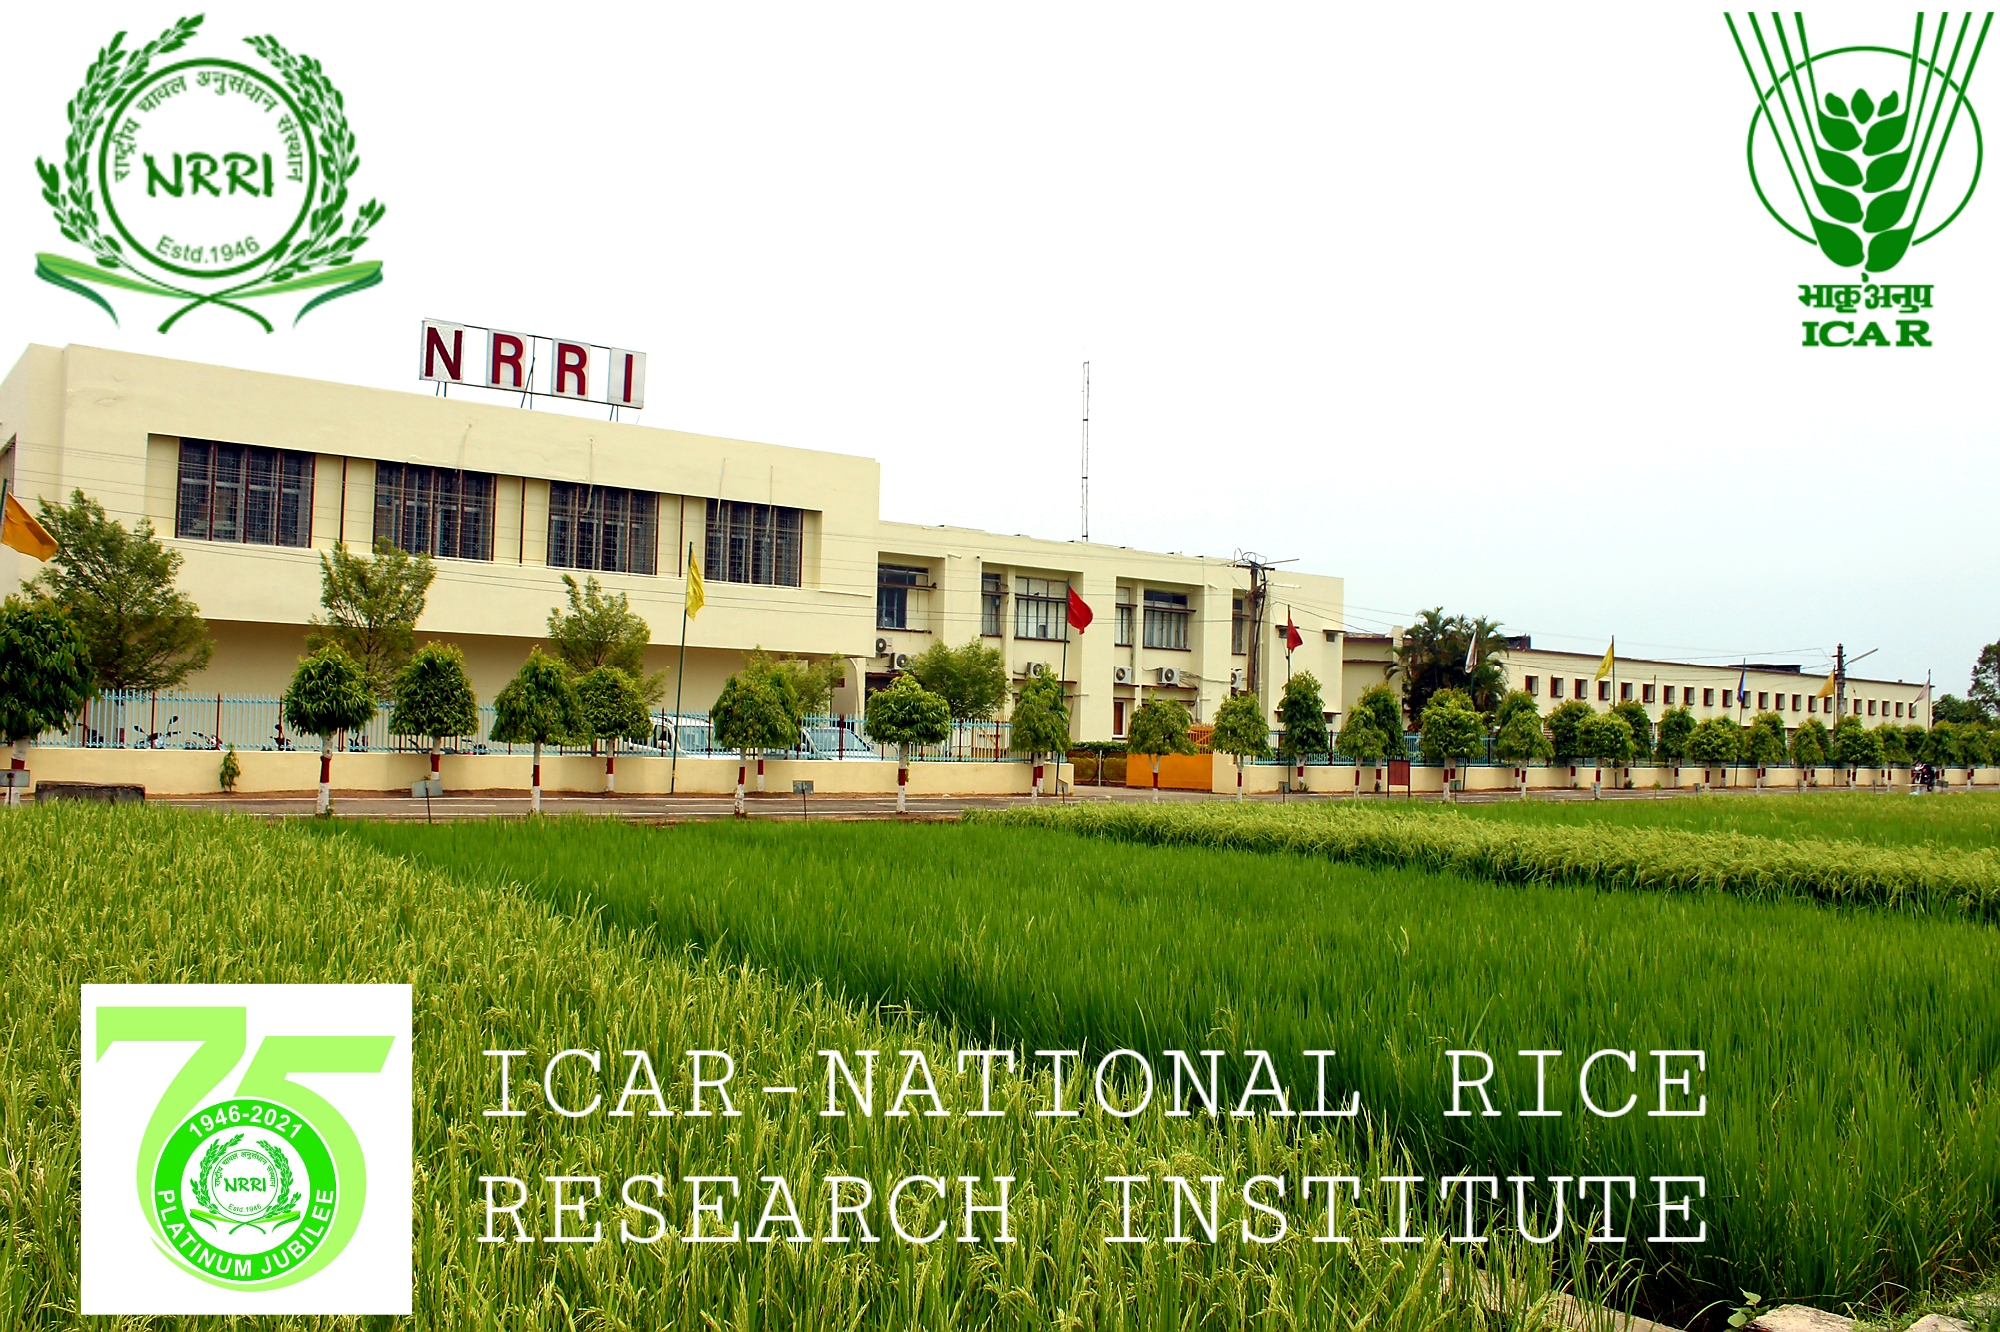 icar - national rice research institute (nrri)